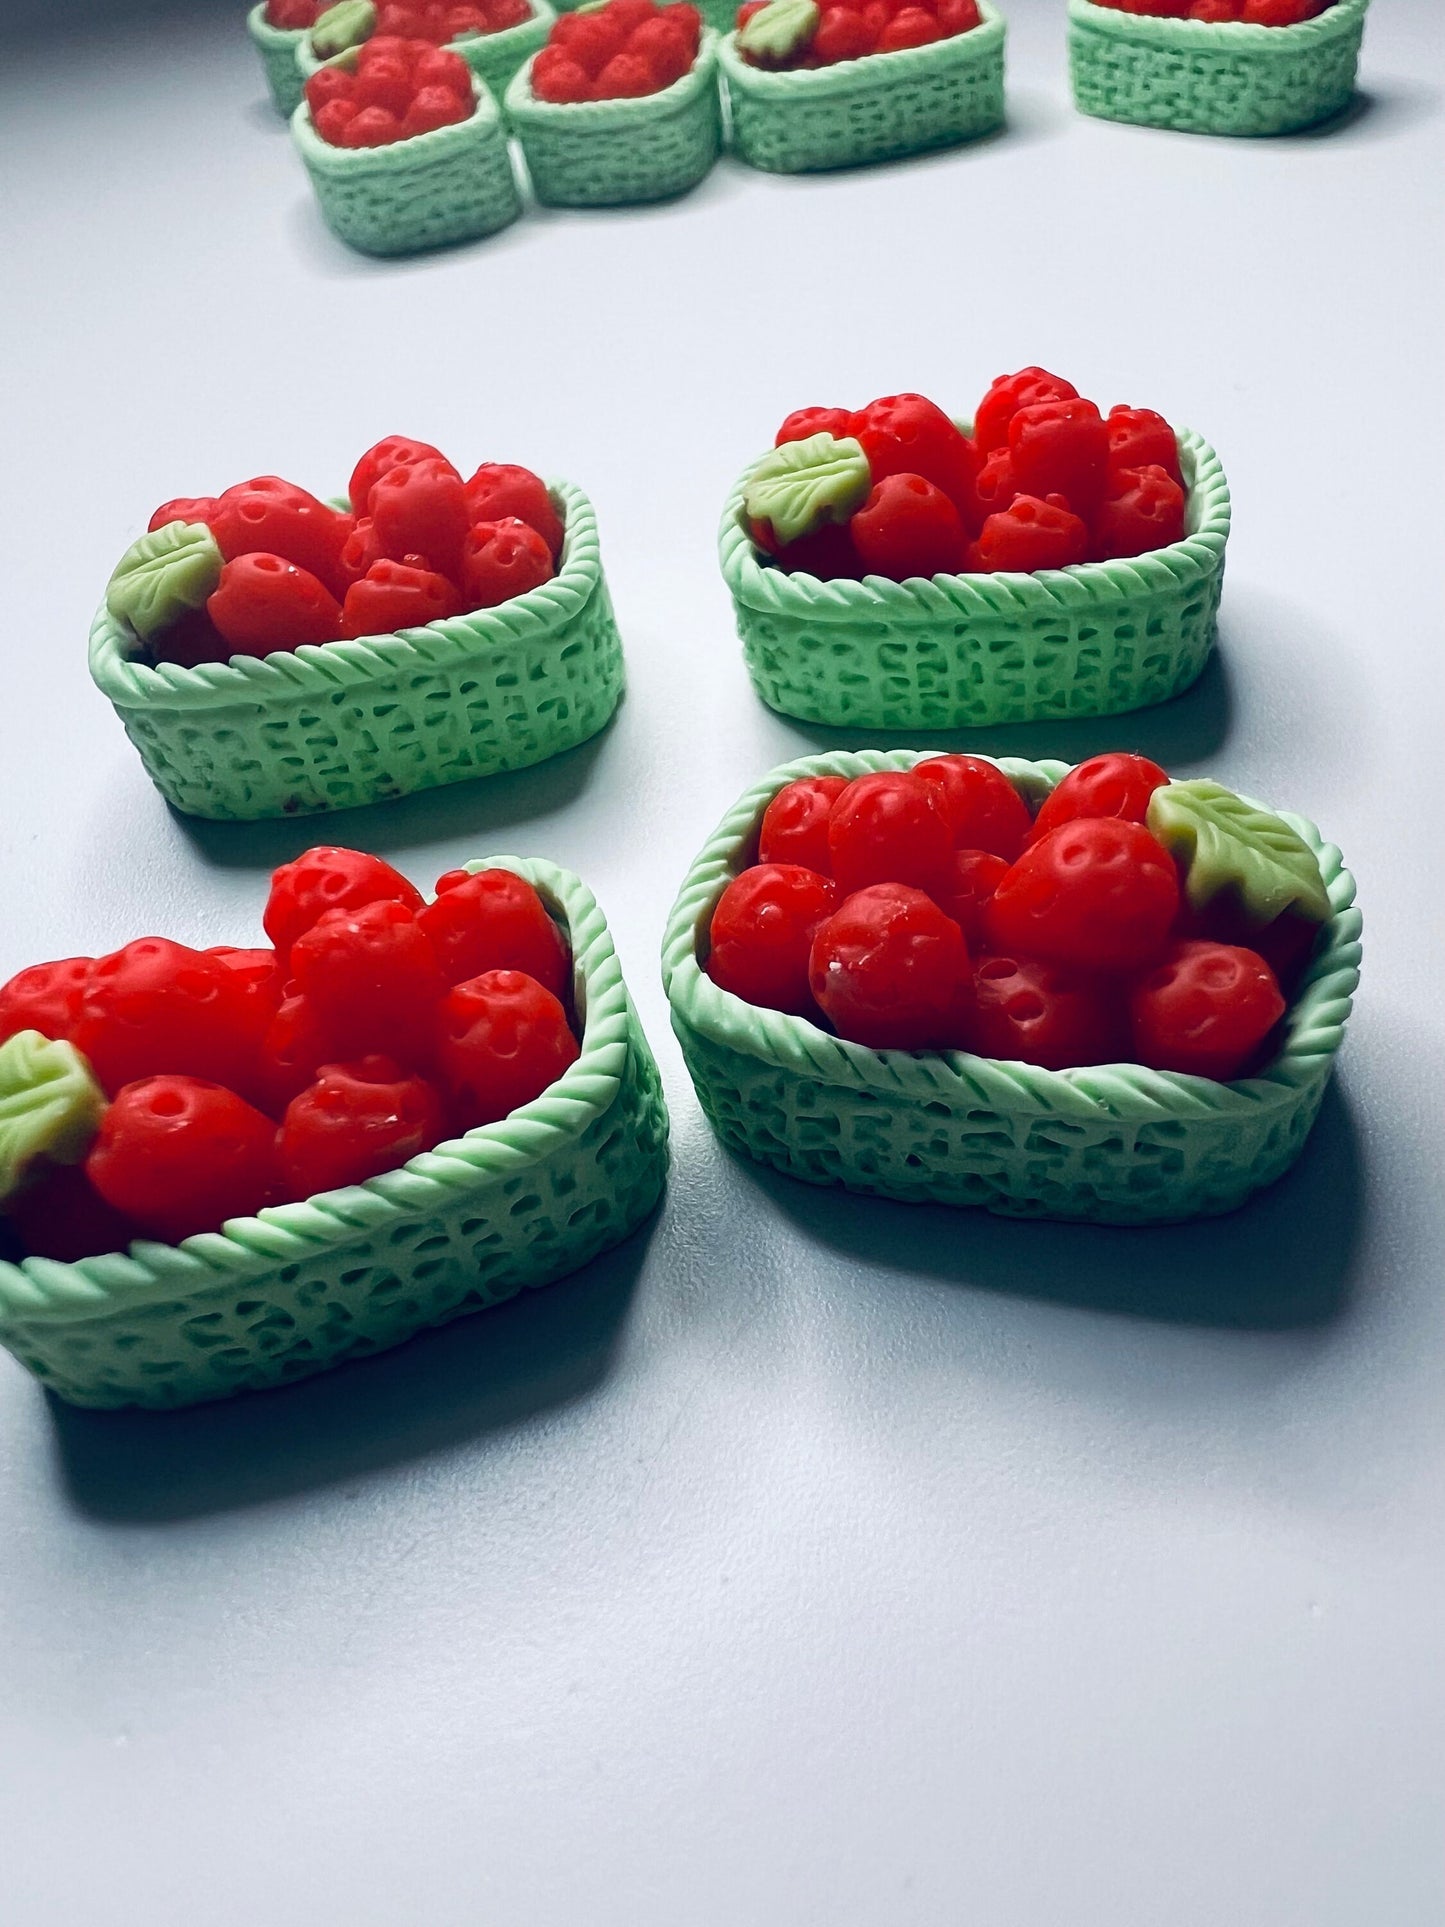 Baratijas de frutas de cesta de frambuesa en miniatura - Mini objetos discurso Montessori - Mini baratija de frambuesa - Objetos en miniatura de frutas para casa de muñecas